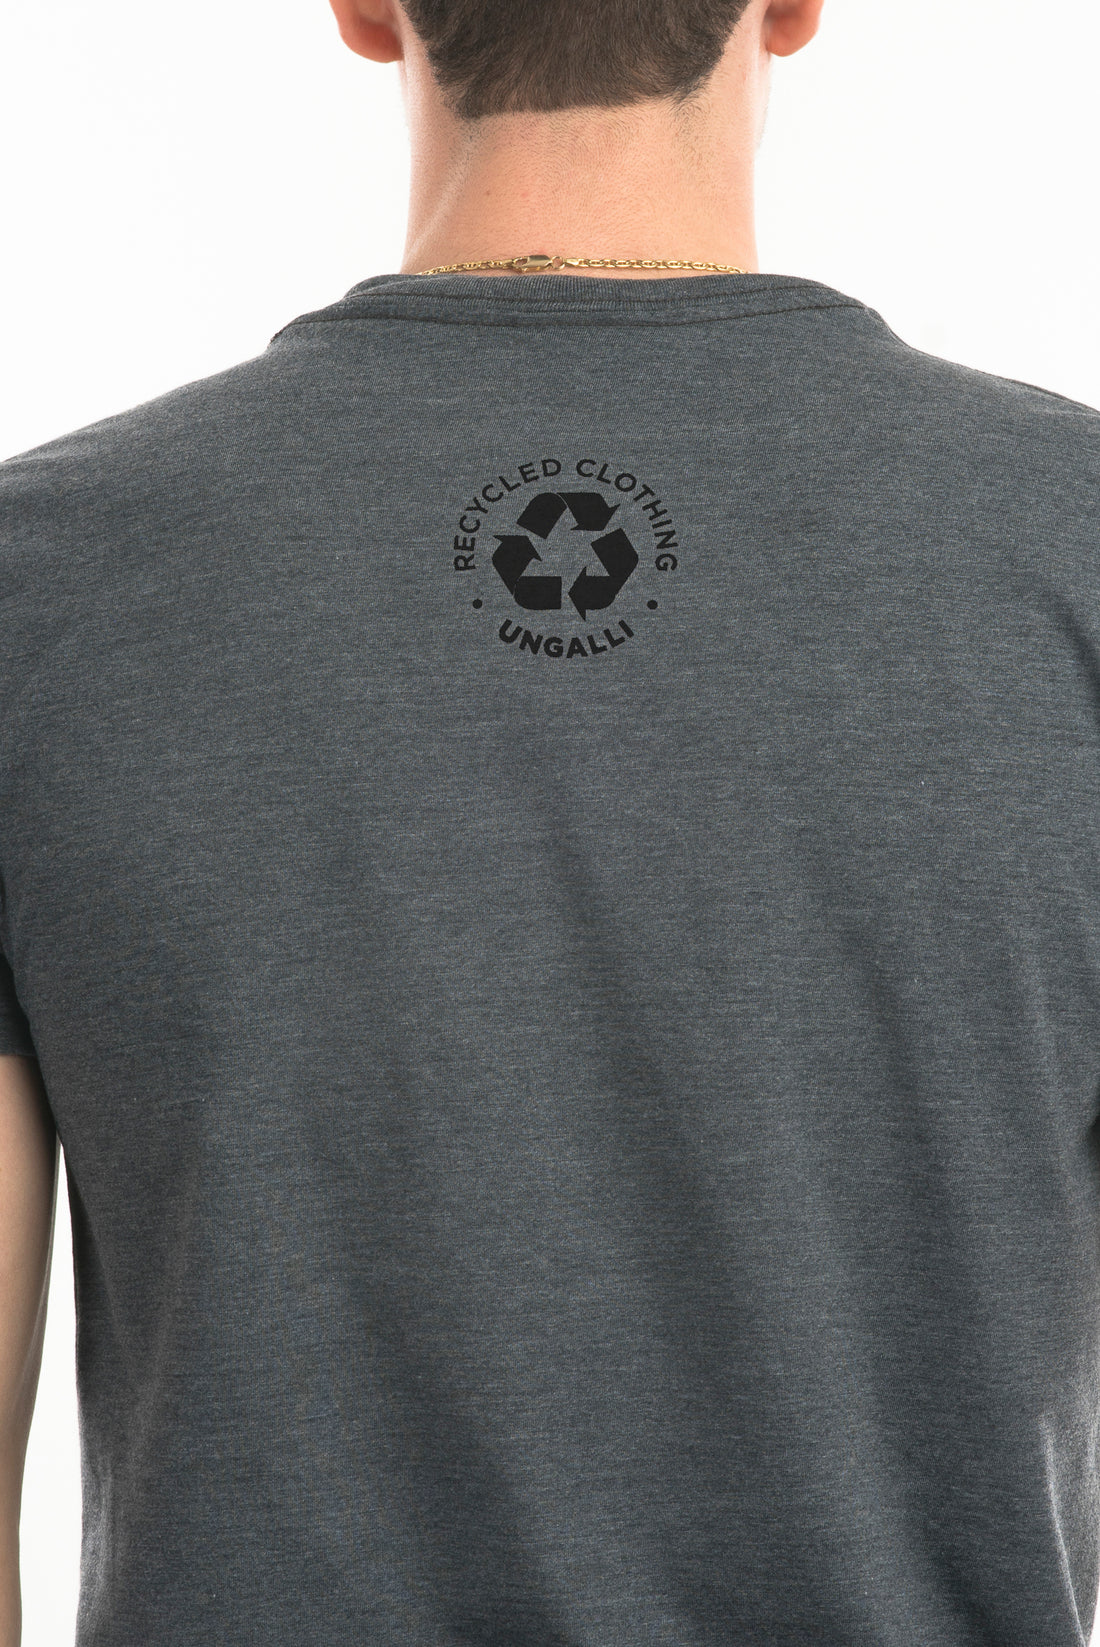 Unisex organic grey t-shirt with matte black Ungalli logo across front